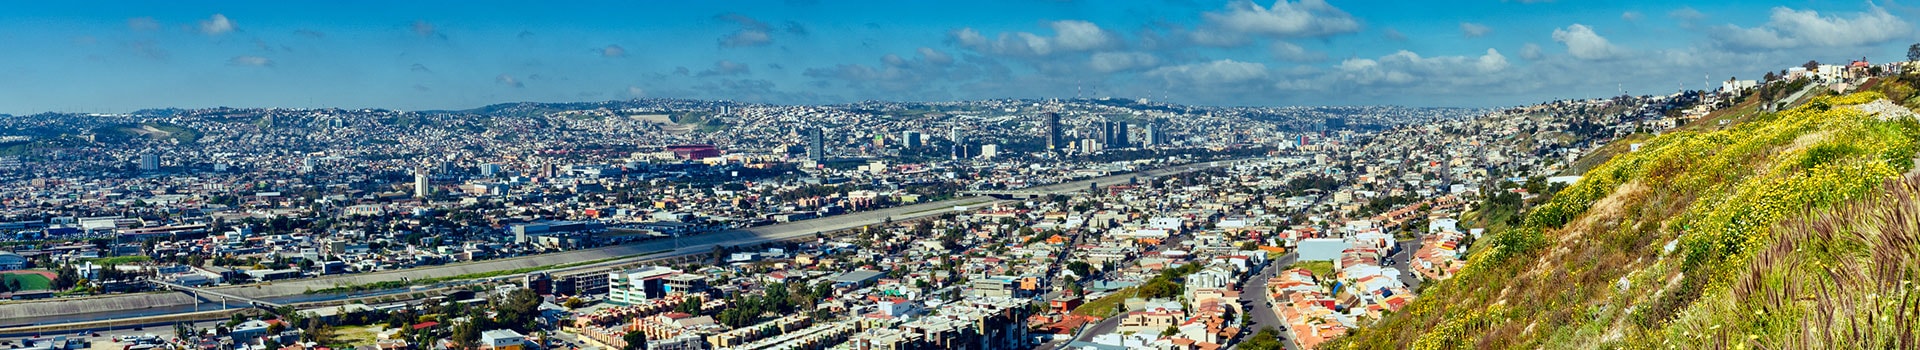 Guayaquil - Tijuana